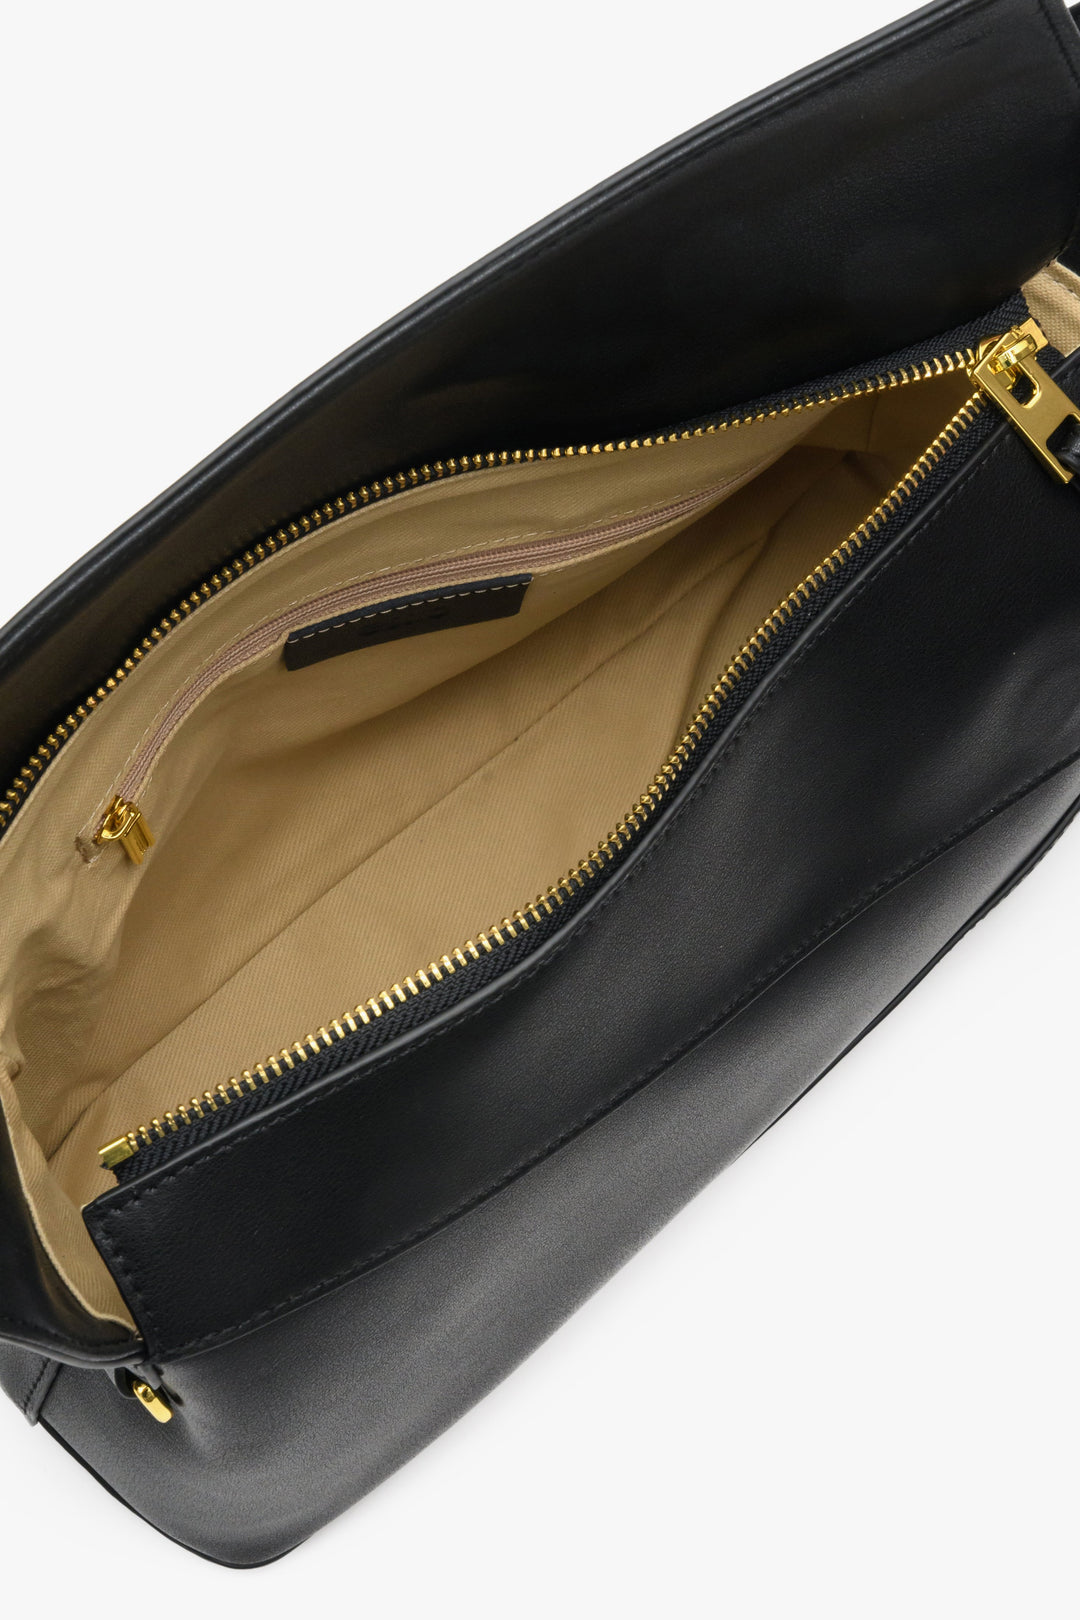 Women's leather black handbag by Estro - close-up on the interior.